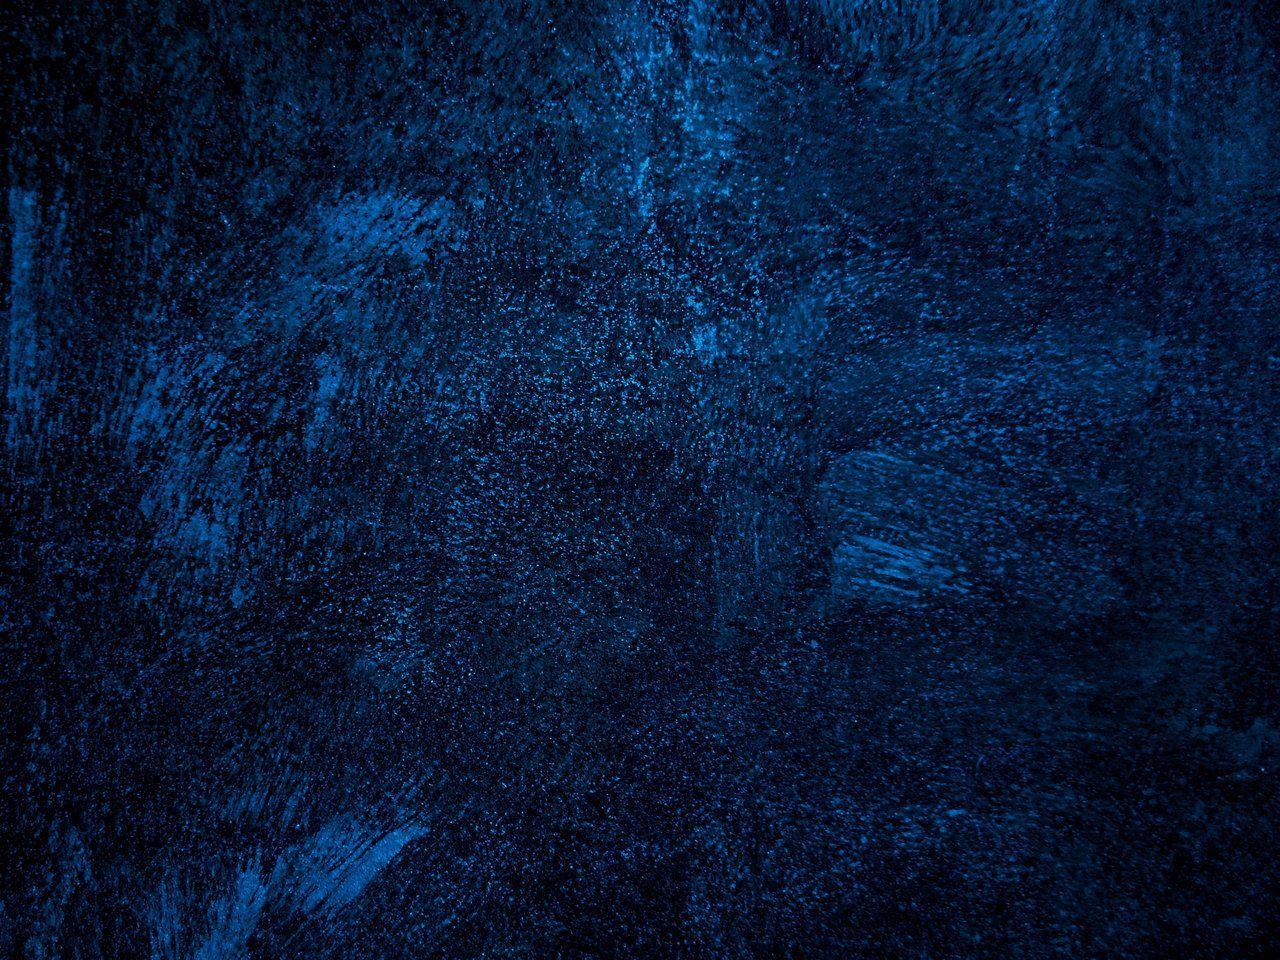 Dark Blue Background Blue Deep Solid Background Image for Free Download